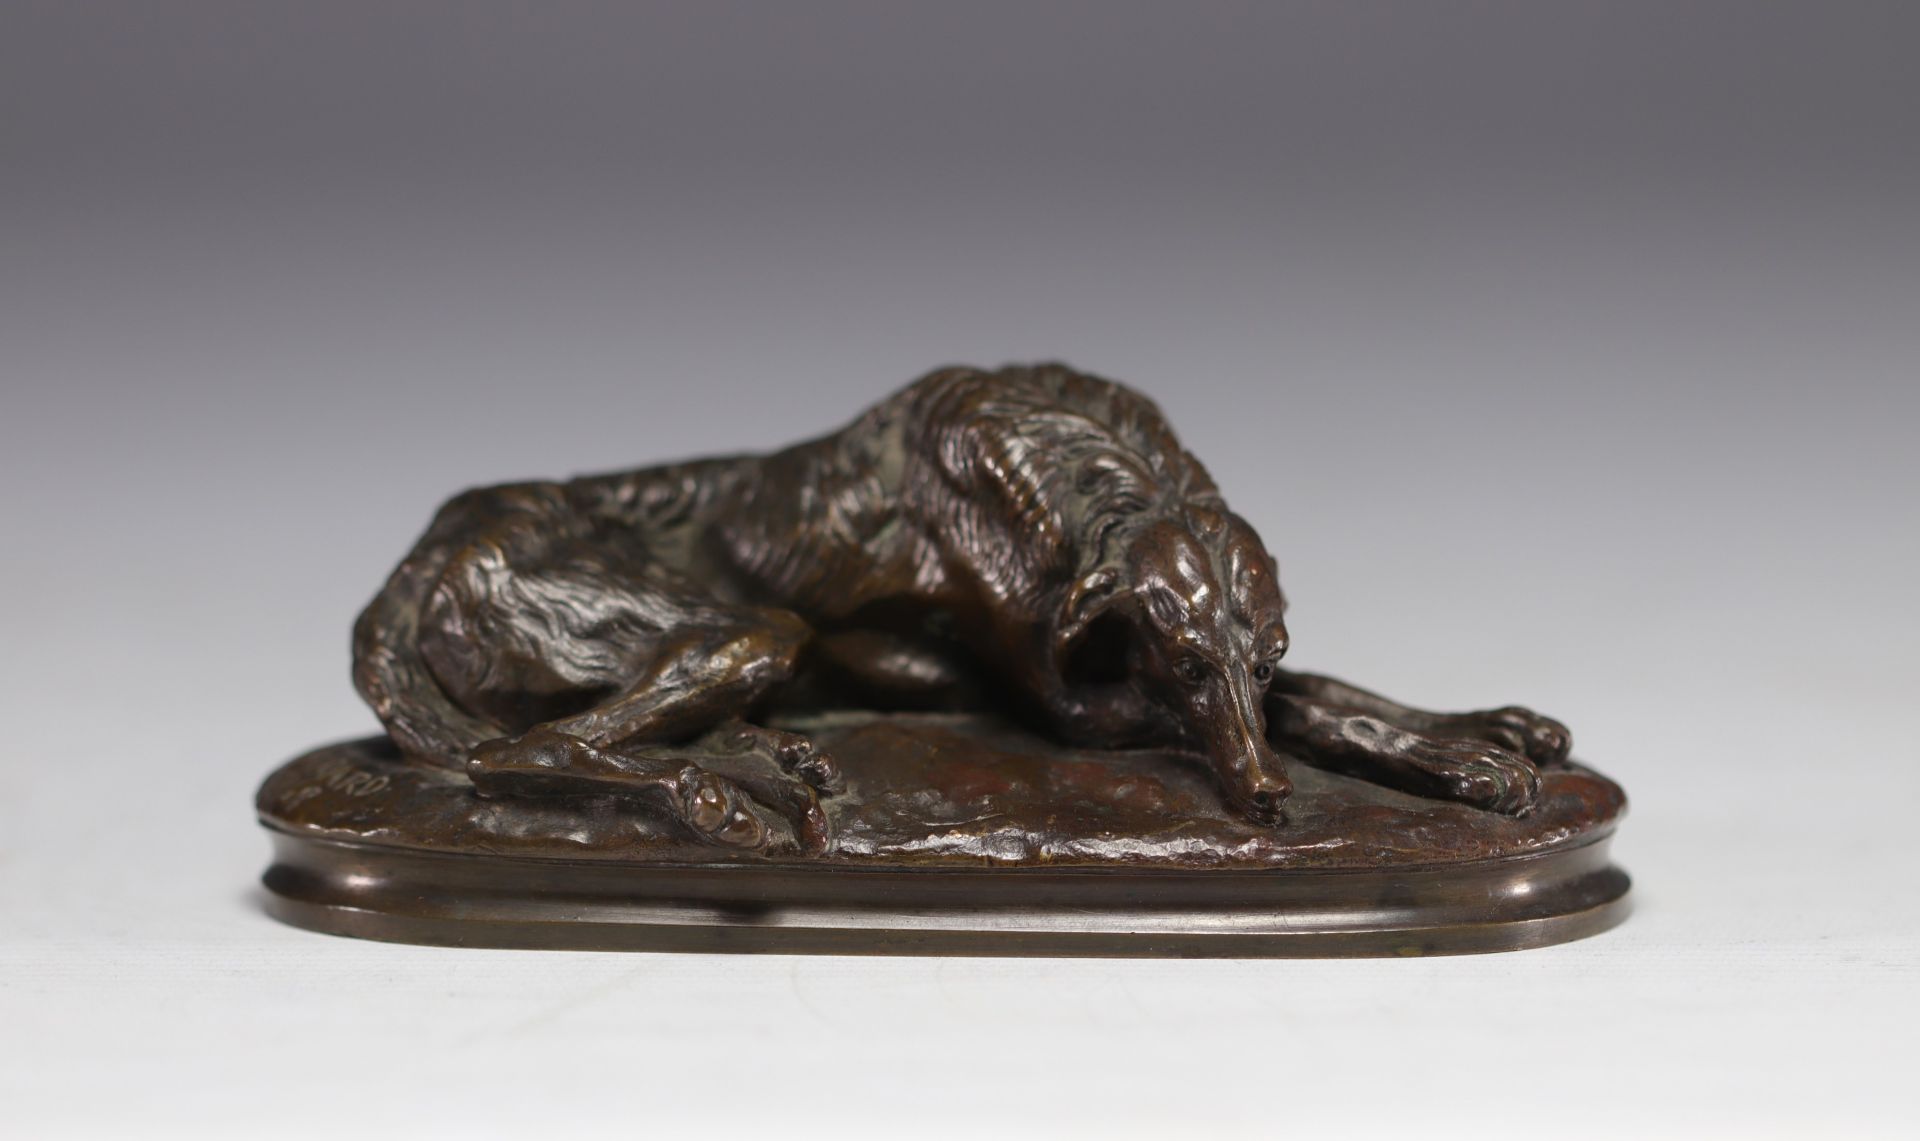 Paul GAYRARD (1807-1855) "Sleeping Afghan greyhound" Bronze sculpture.